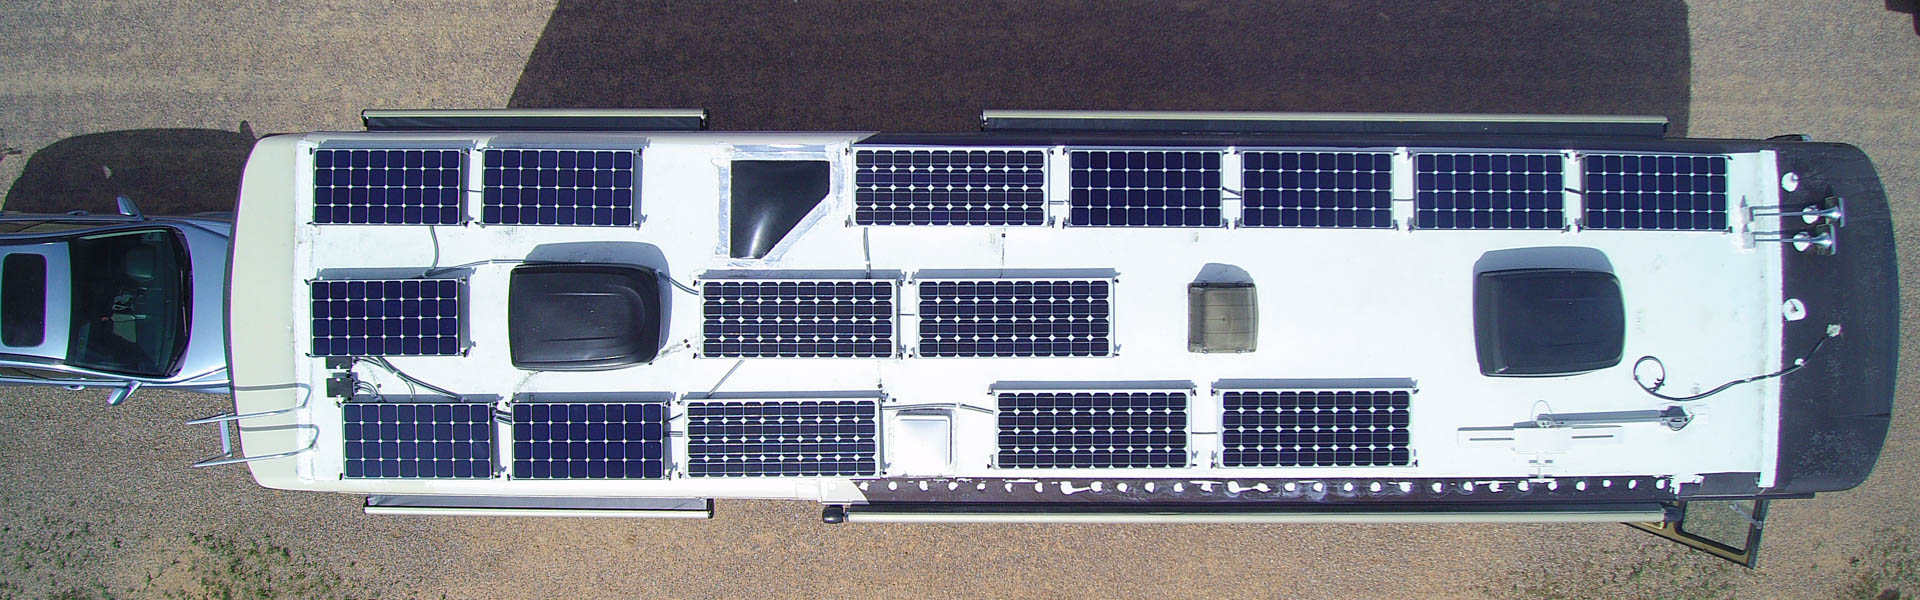 Motorhome Solar Installation by Precision RV